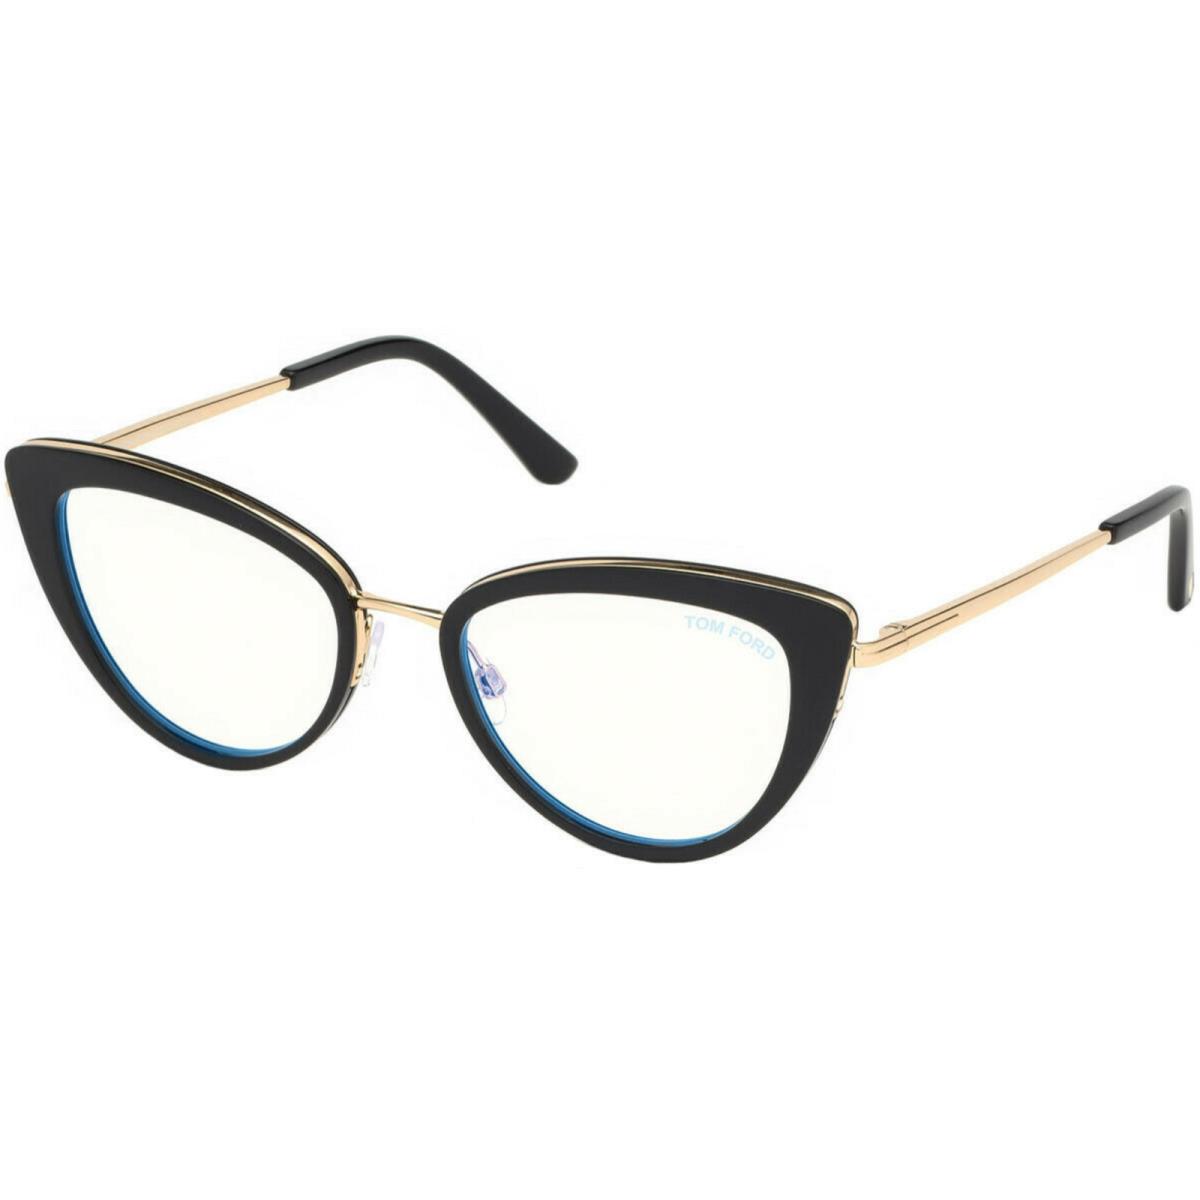 Tom Ford Classic Eyeglasses TF 5580-B 001 53-19 Black Gold Cat-eye Frames